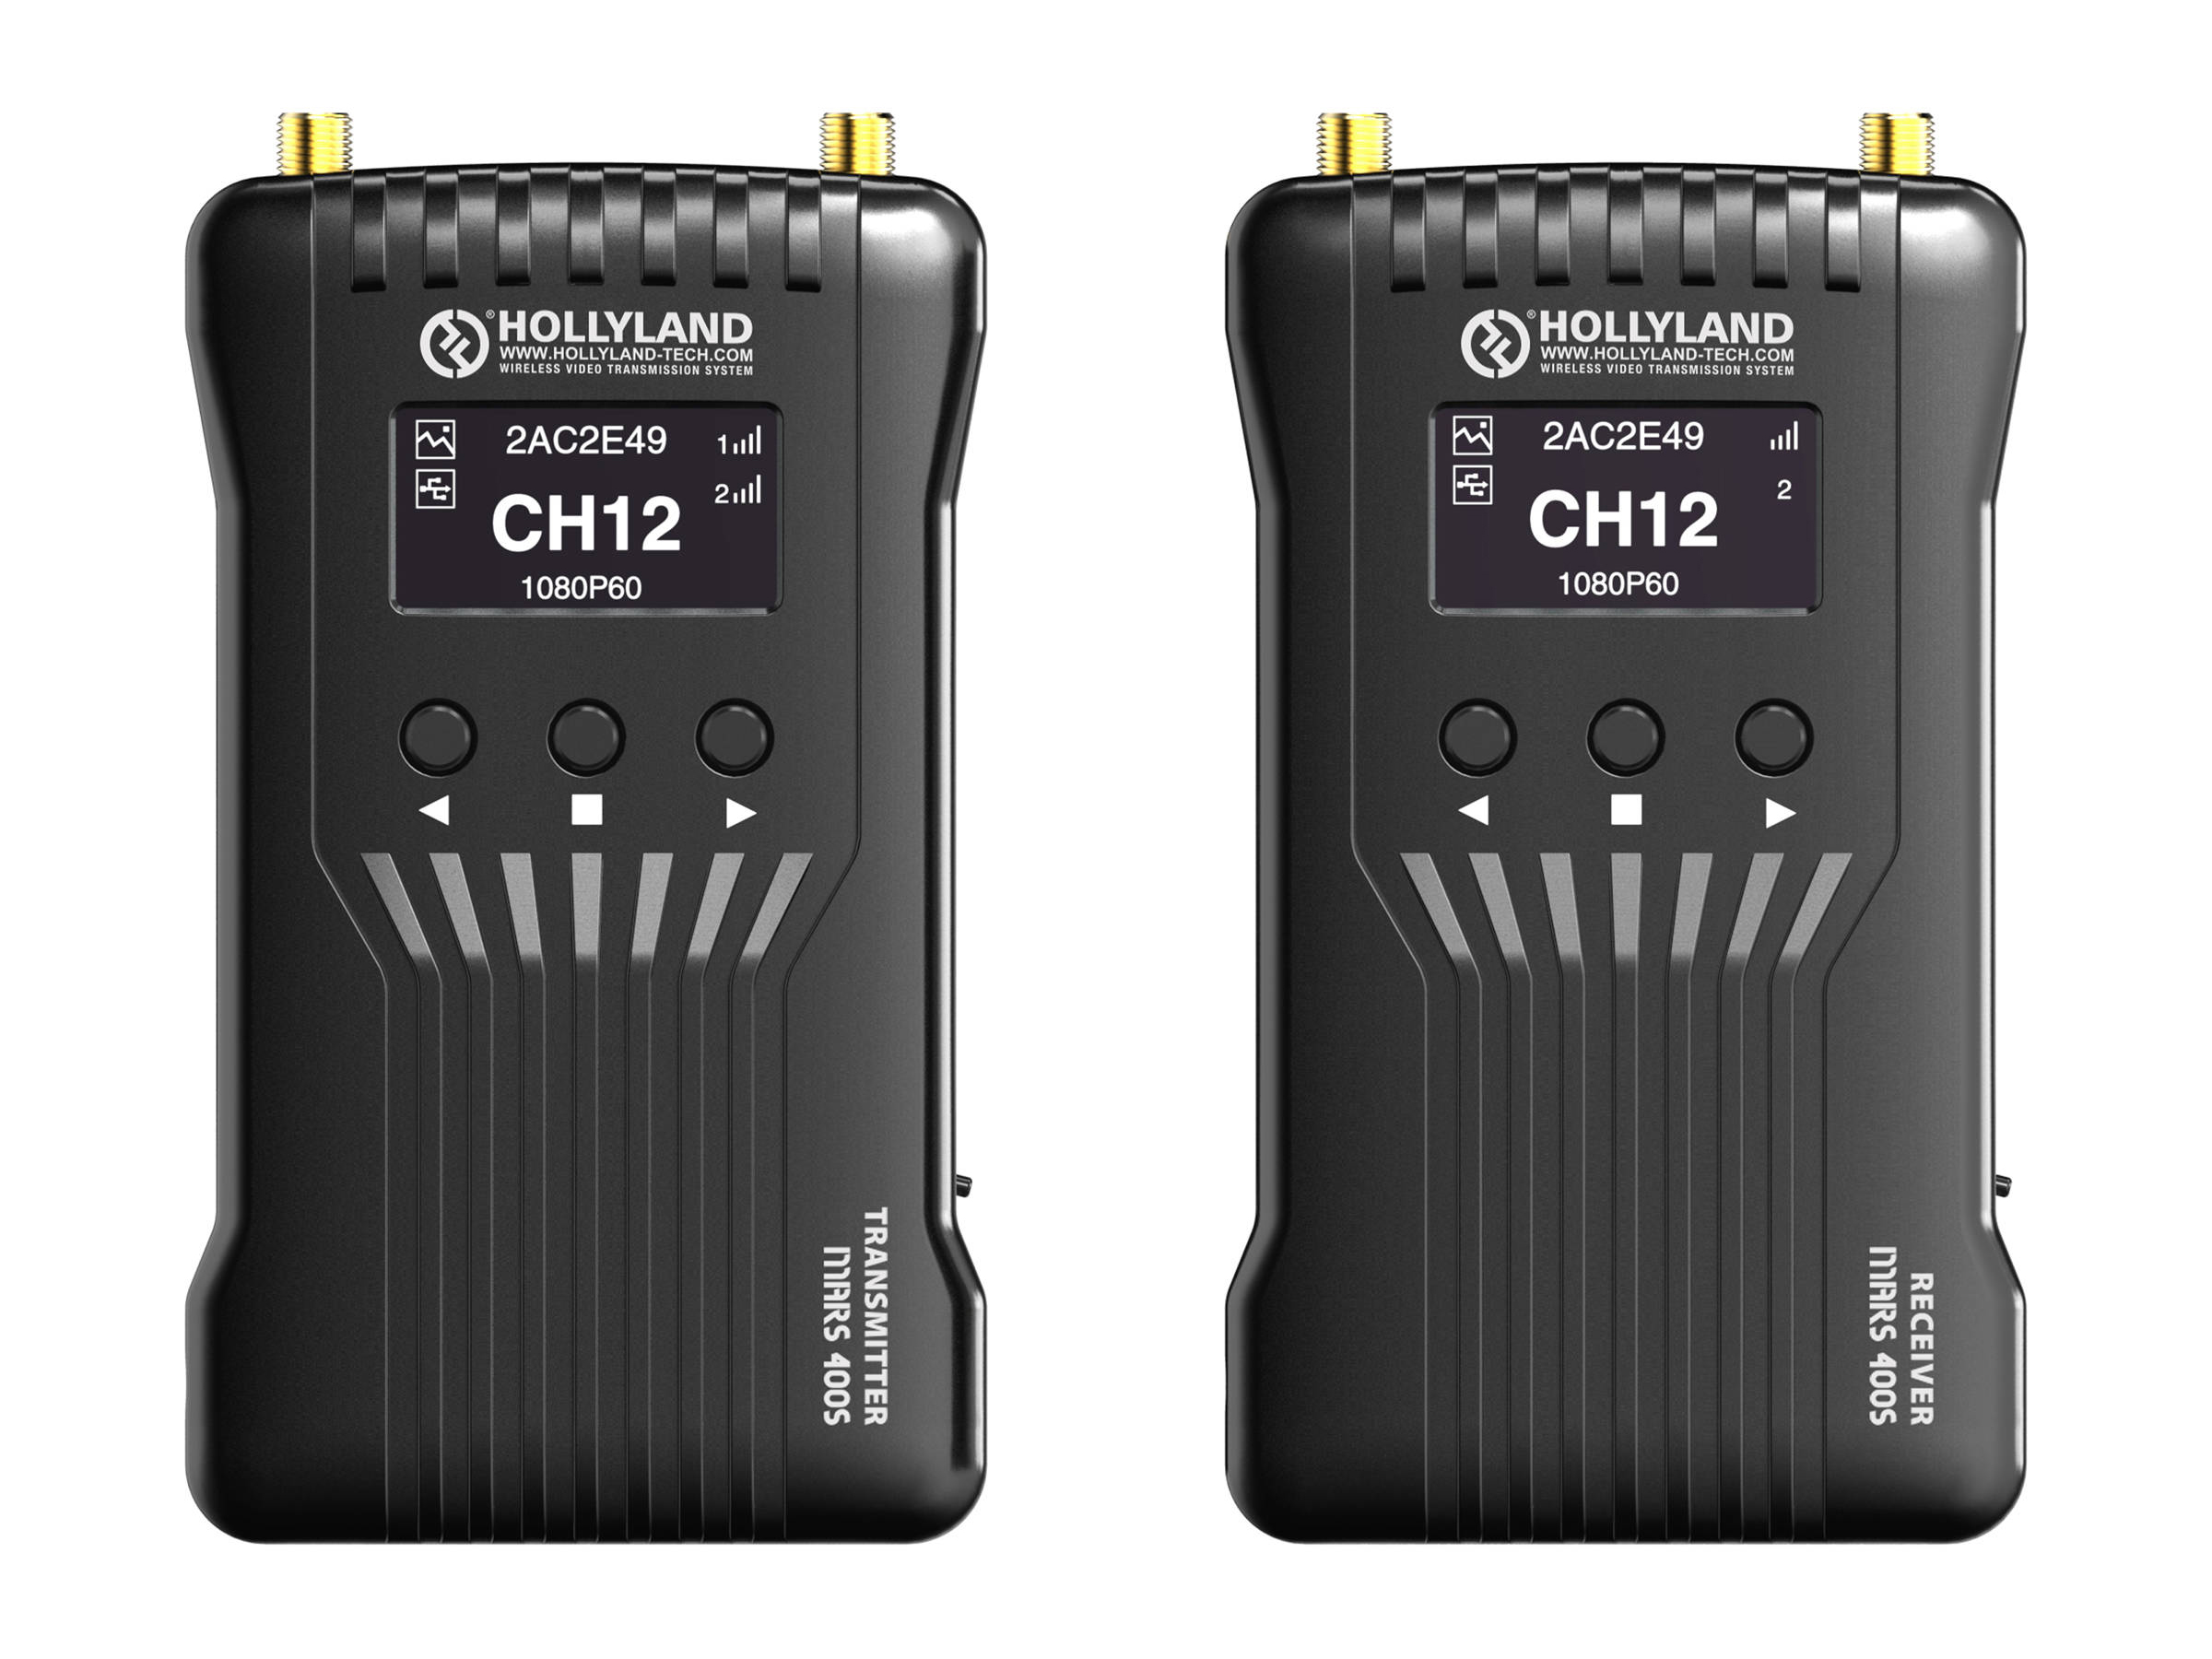 HL-Mars-400S SDI/HDMI Wireless Video Transmission (Transmitter/Receiver) System - 400ft by Hollyland